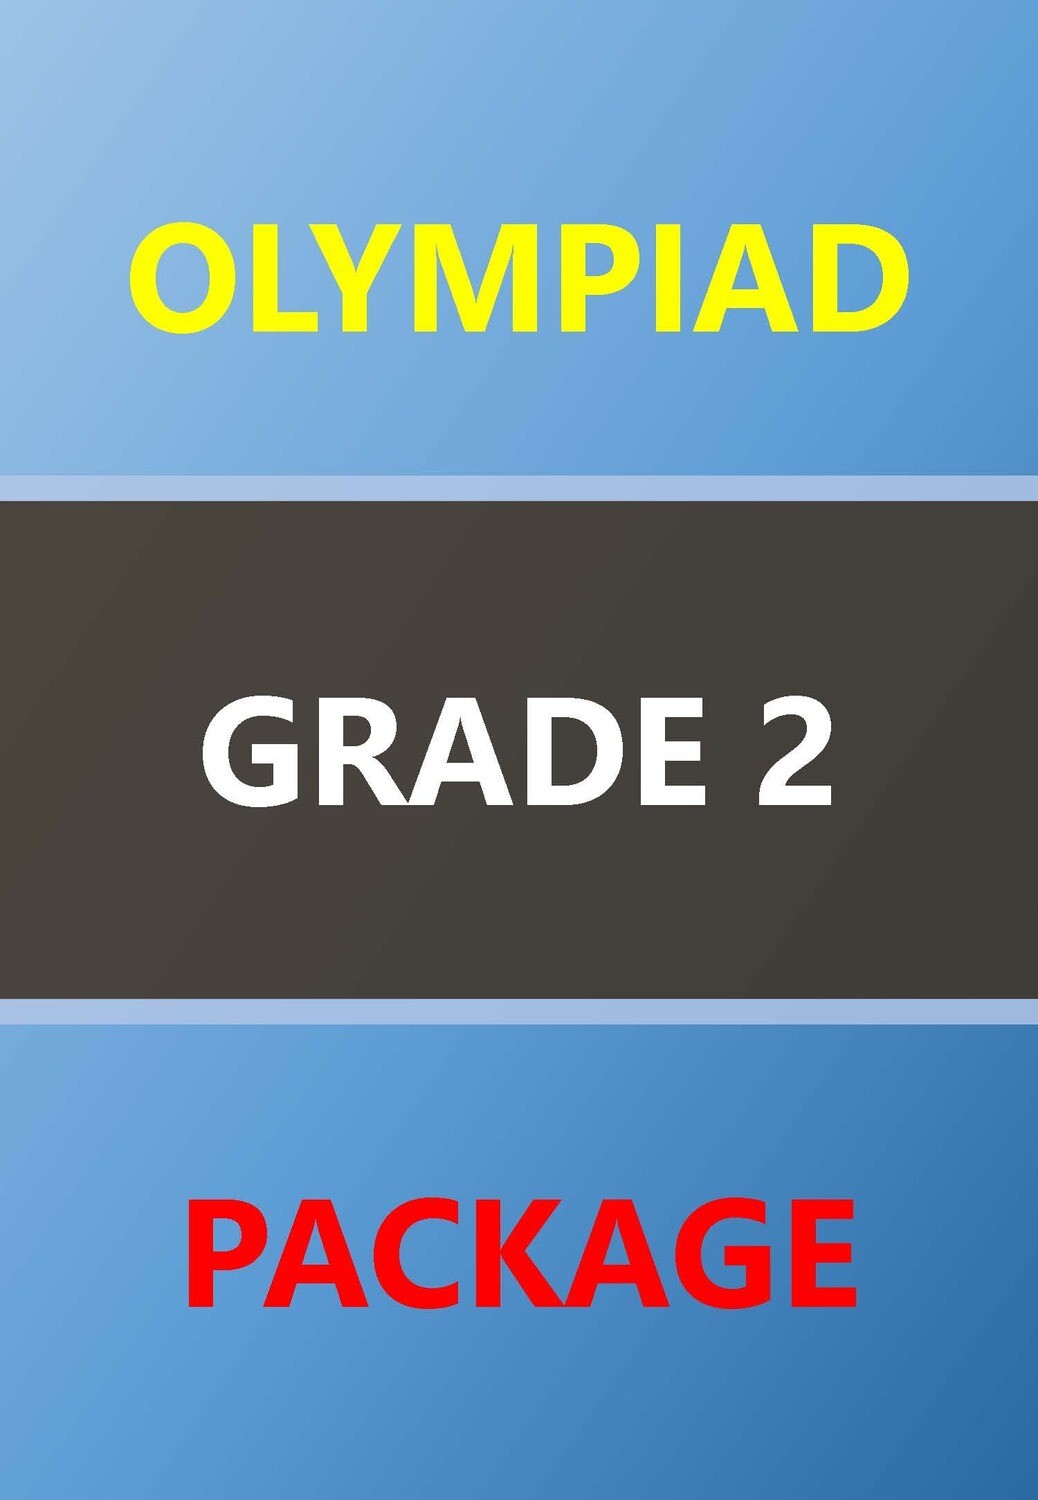 Grade 2 Package